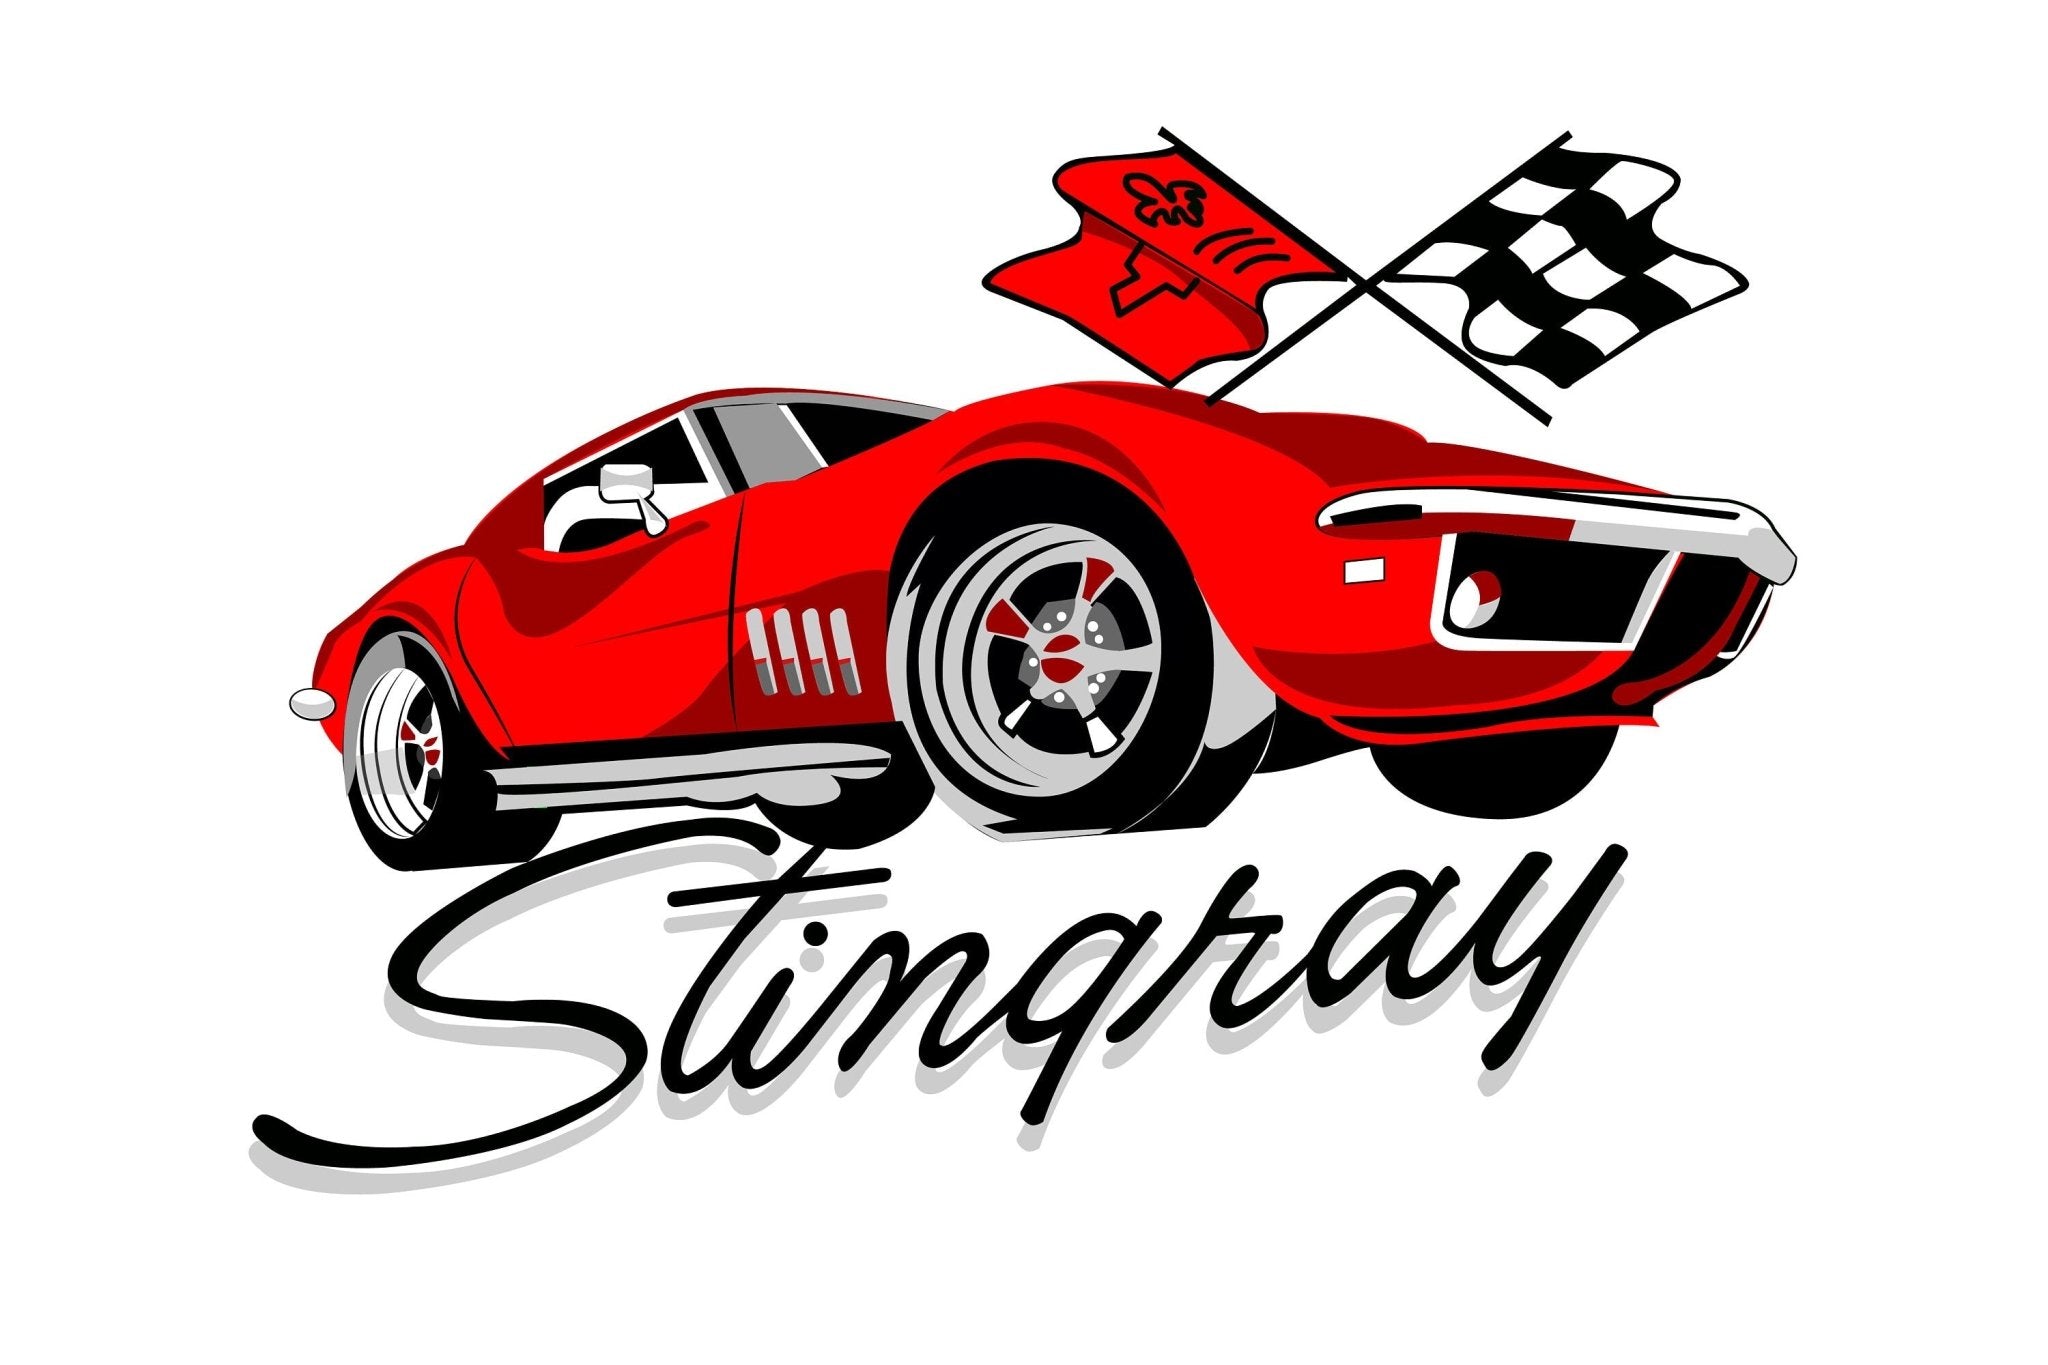 Corvette C3 Red Stingray Instant Download, Vector, Car, Emblem, SVG, Cut File, Print, Digital, Scrapbooking, Cameo, Cricut - Vette1 - C3 Downloads